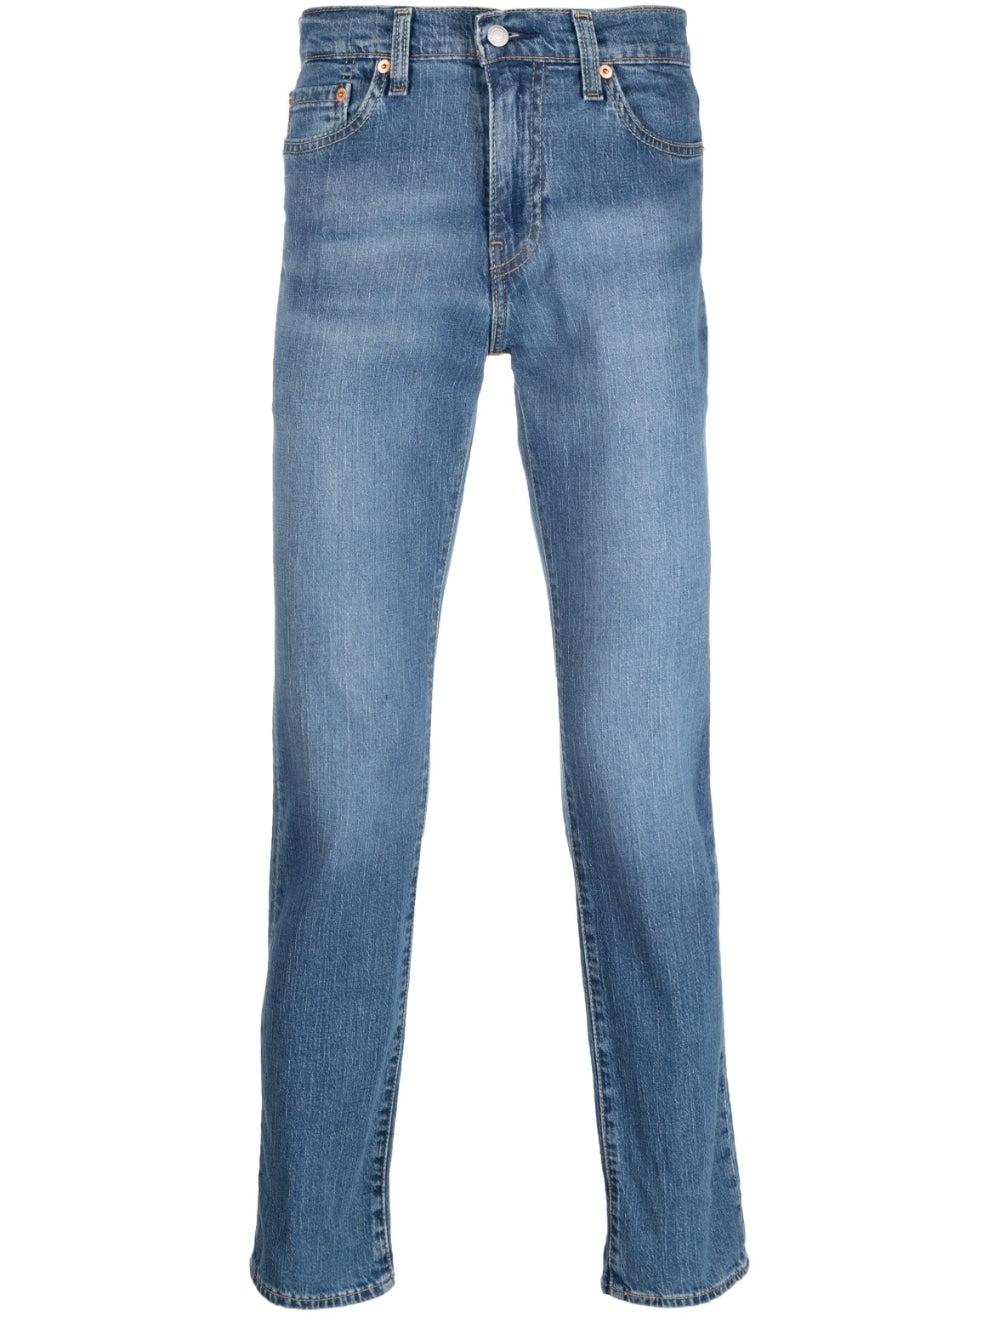 Blue slim-cut jeans